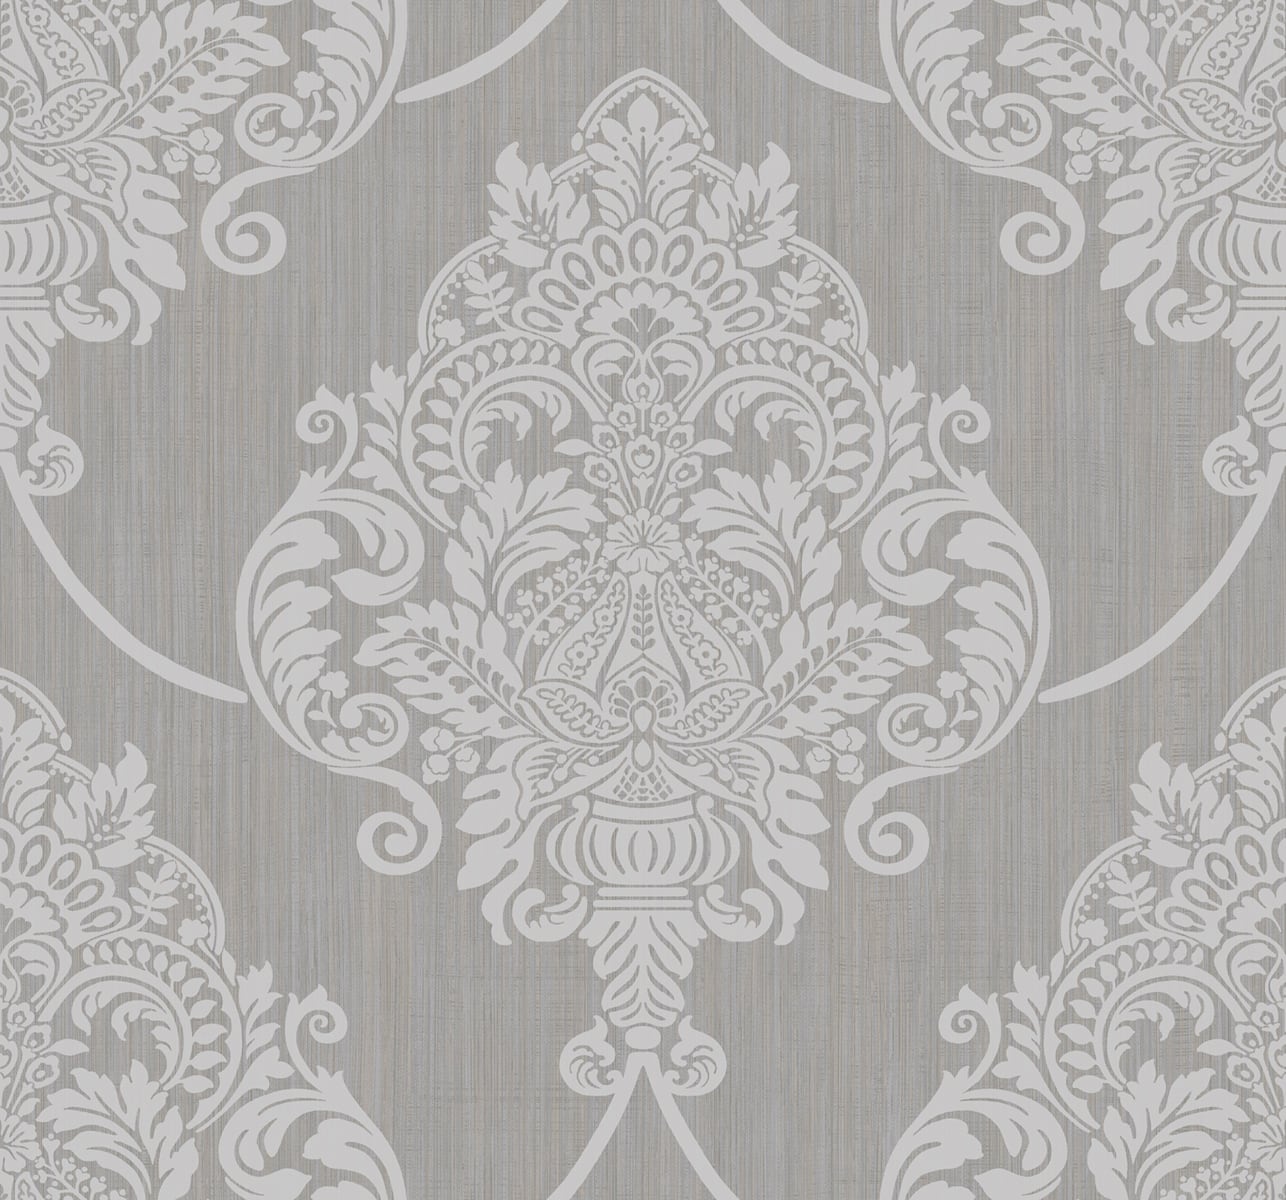 Seabrook Designs AW70808 Casa Blanca 2 Puff Damask  Wallpaper Metallic Silver Glitter and Tan